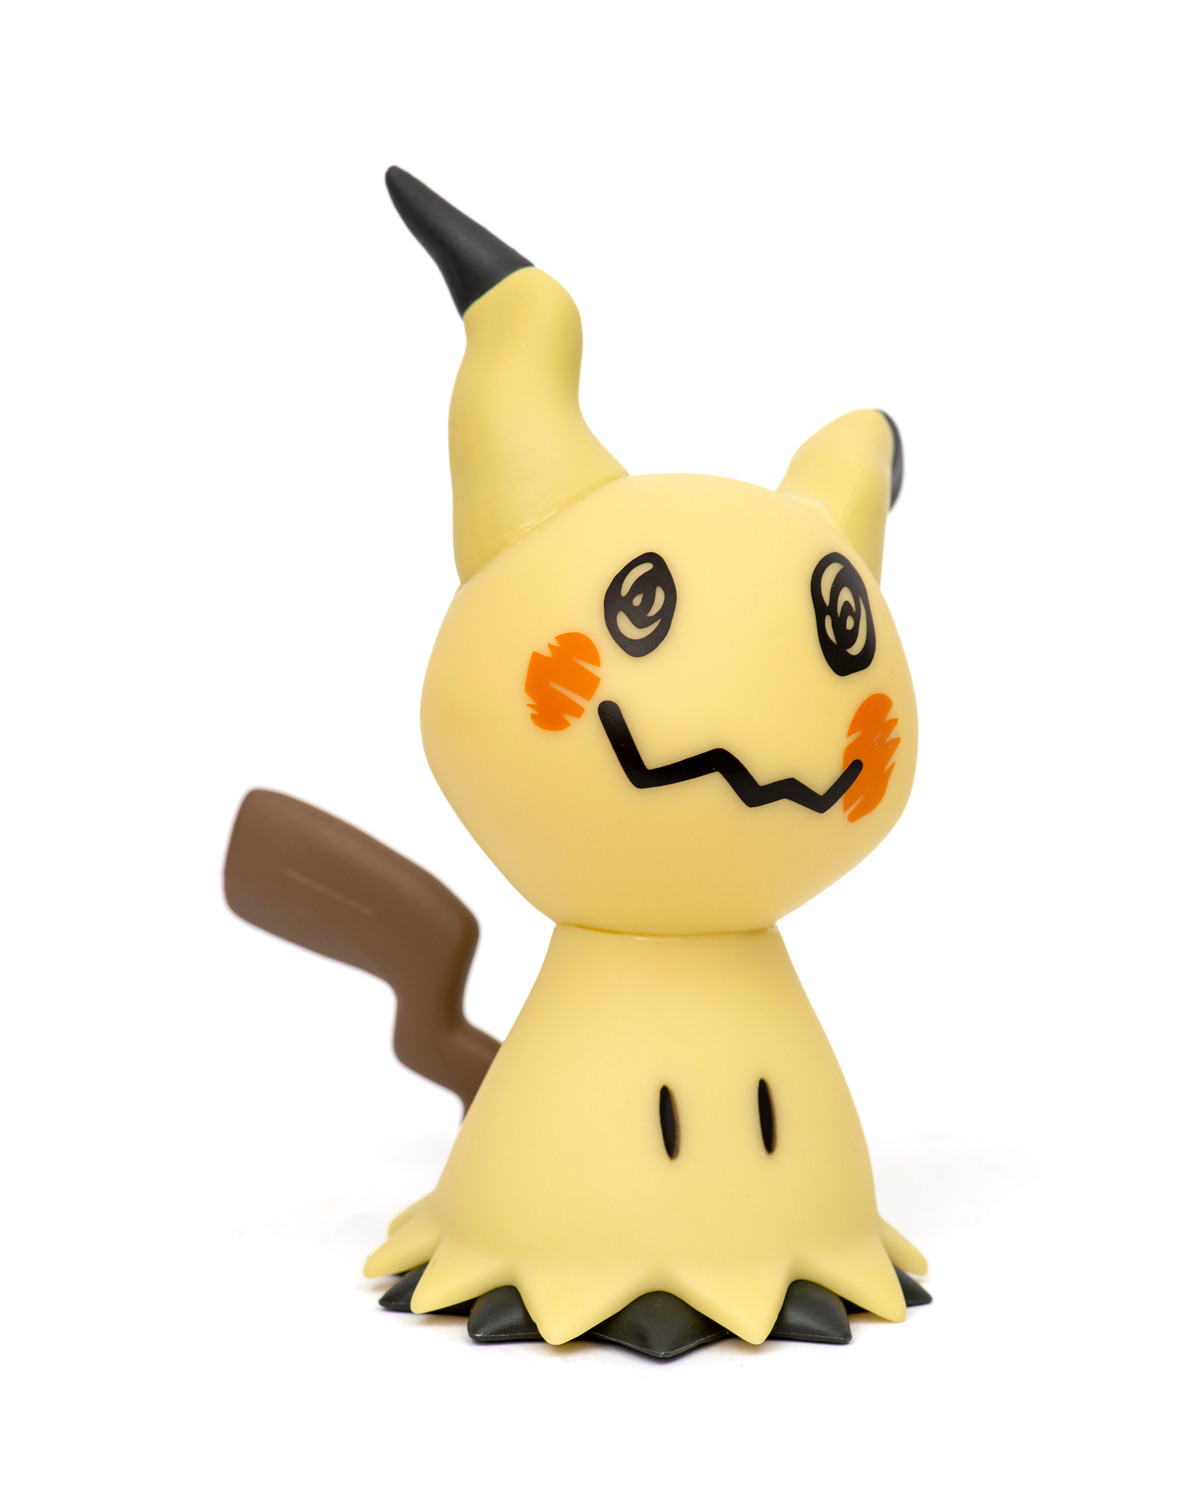 Pokémon - Mimigma Vinyl 10 cm Figur 